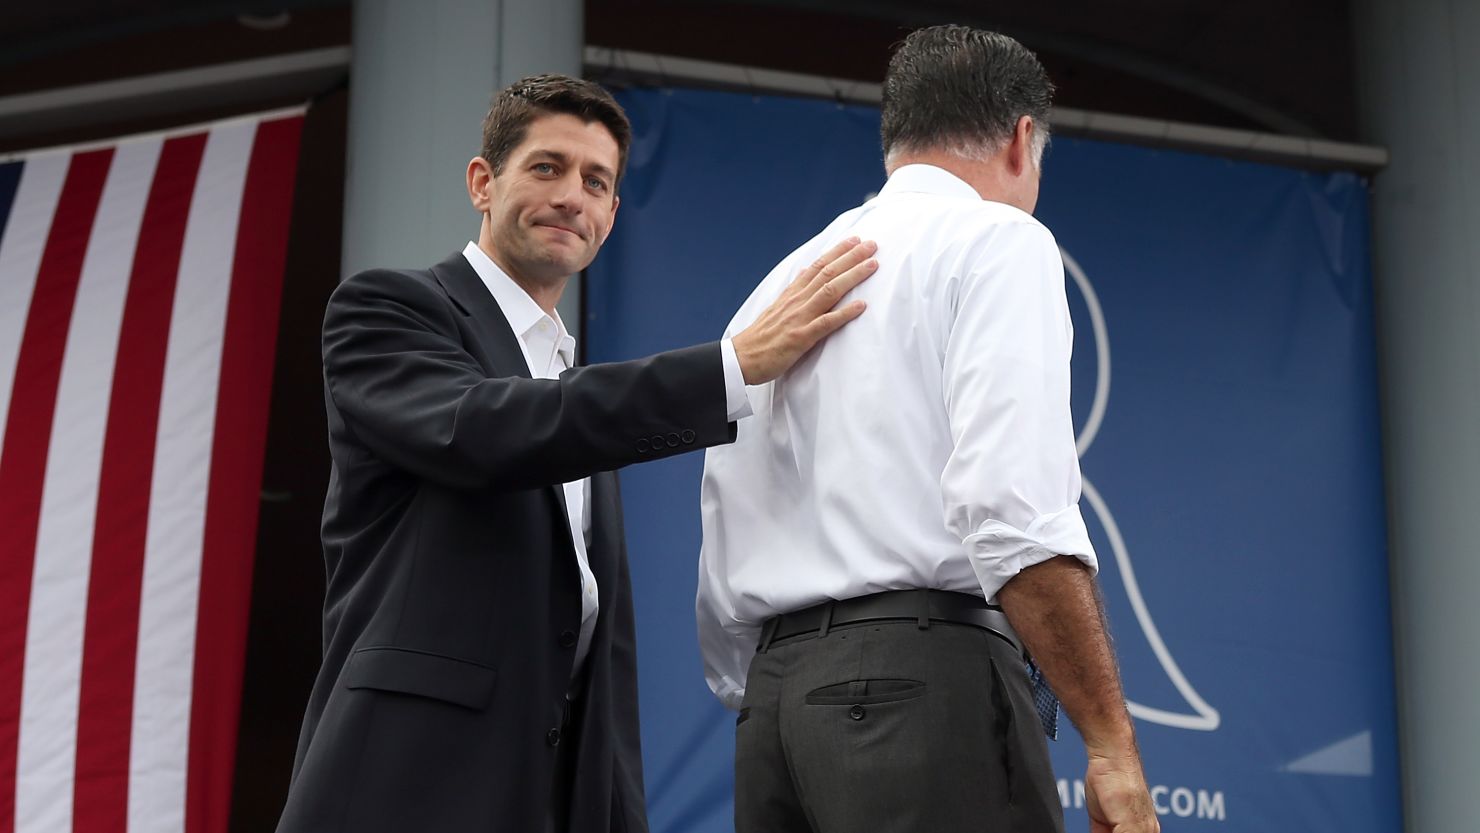 U.S. Rep. Paul Ryan with  Mitt Romney during the announcement in Norfolk, Virginia  of Ryan as Romney's running mate.